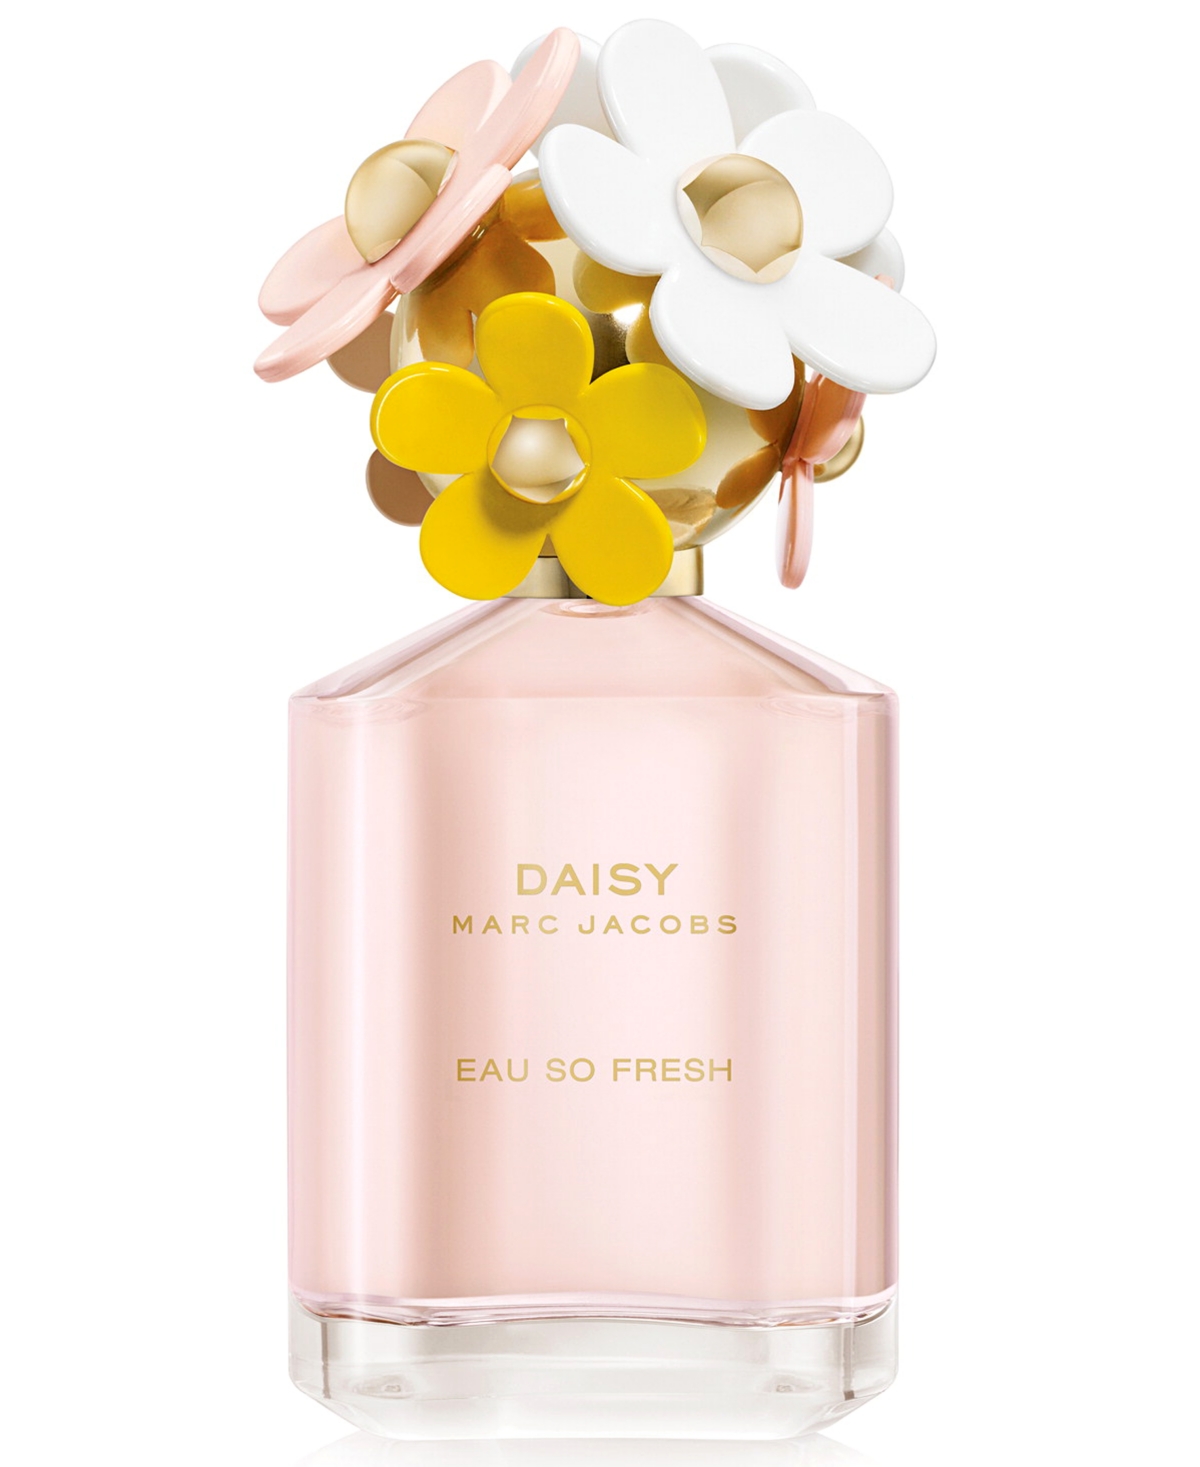 Marc Jacobs Daisy Eau So Fresh Eau de Toilette Spray, 4.2 oz.